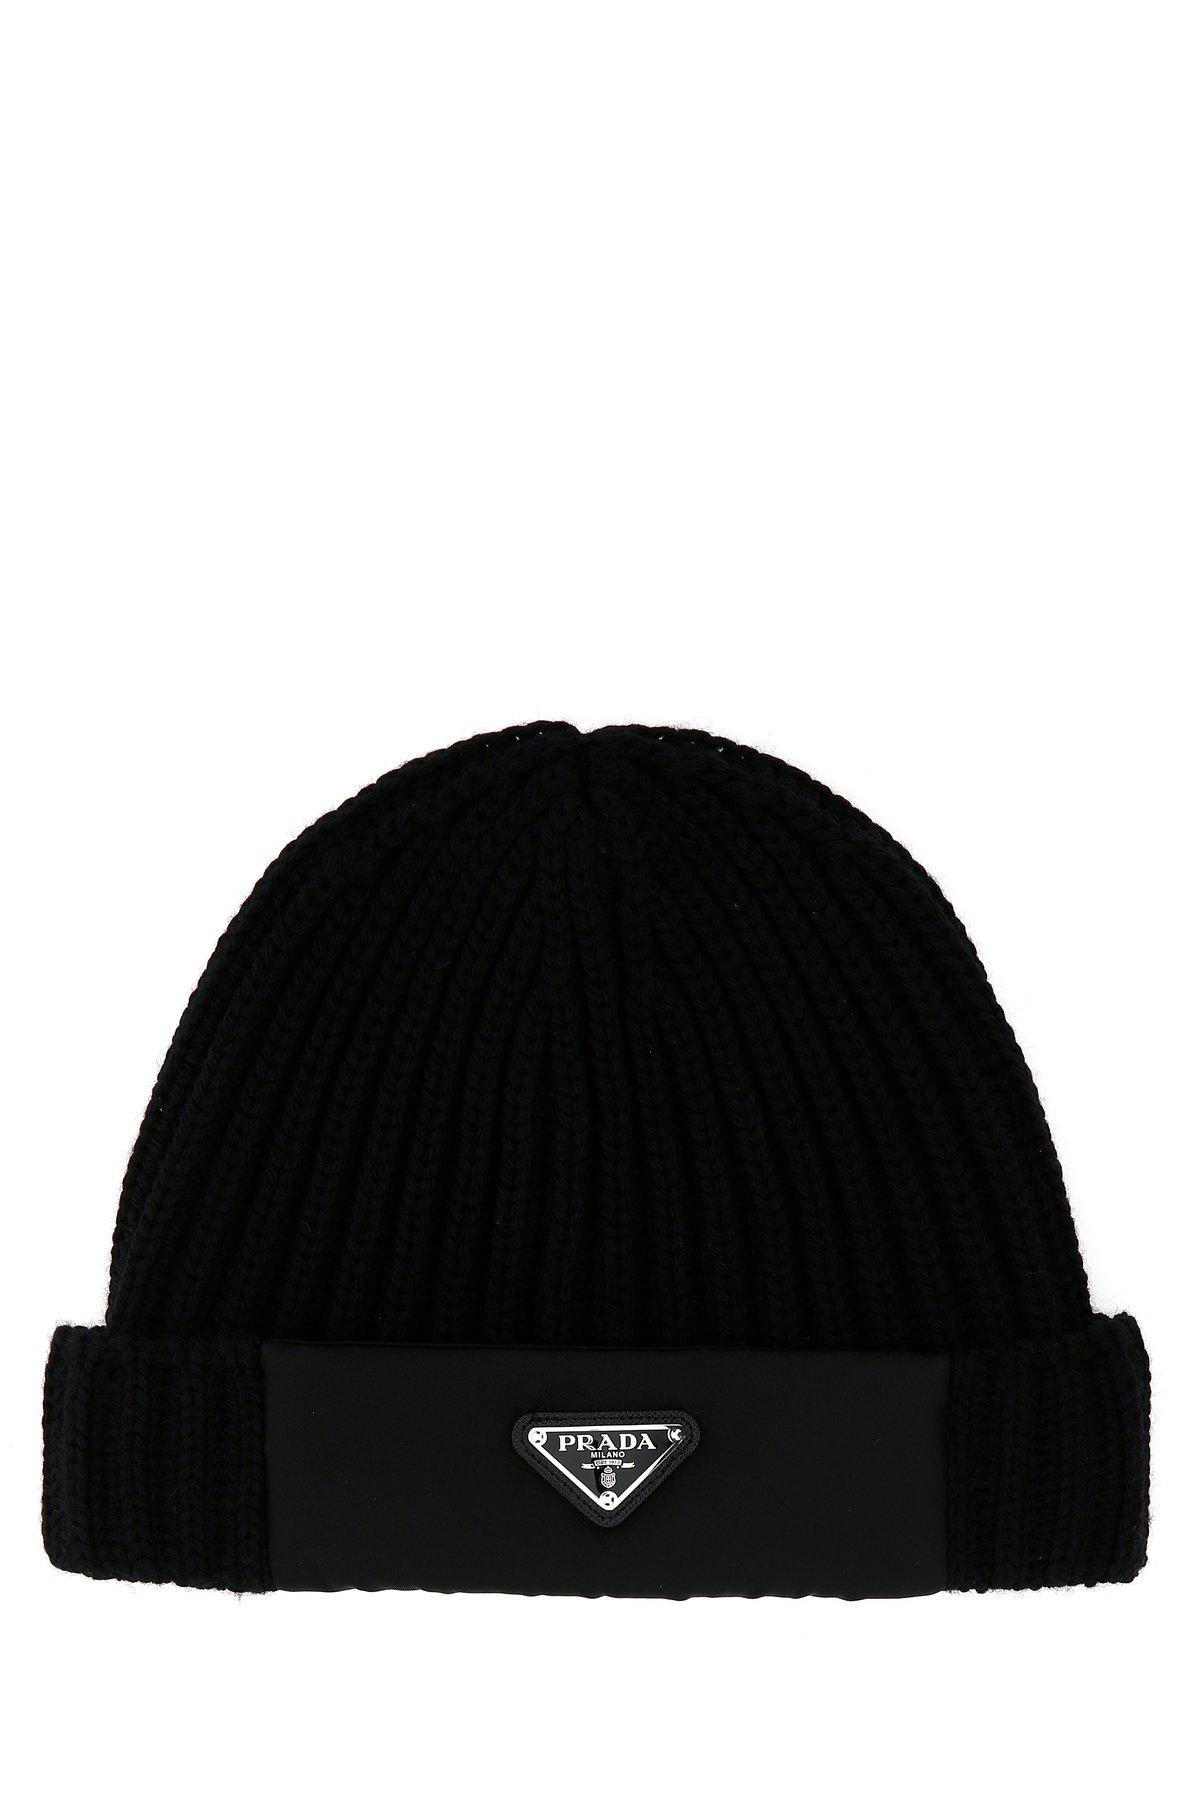 Prada Black Wool Beanie Hat for Men | Lyst